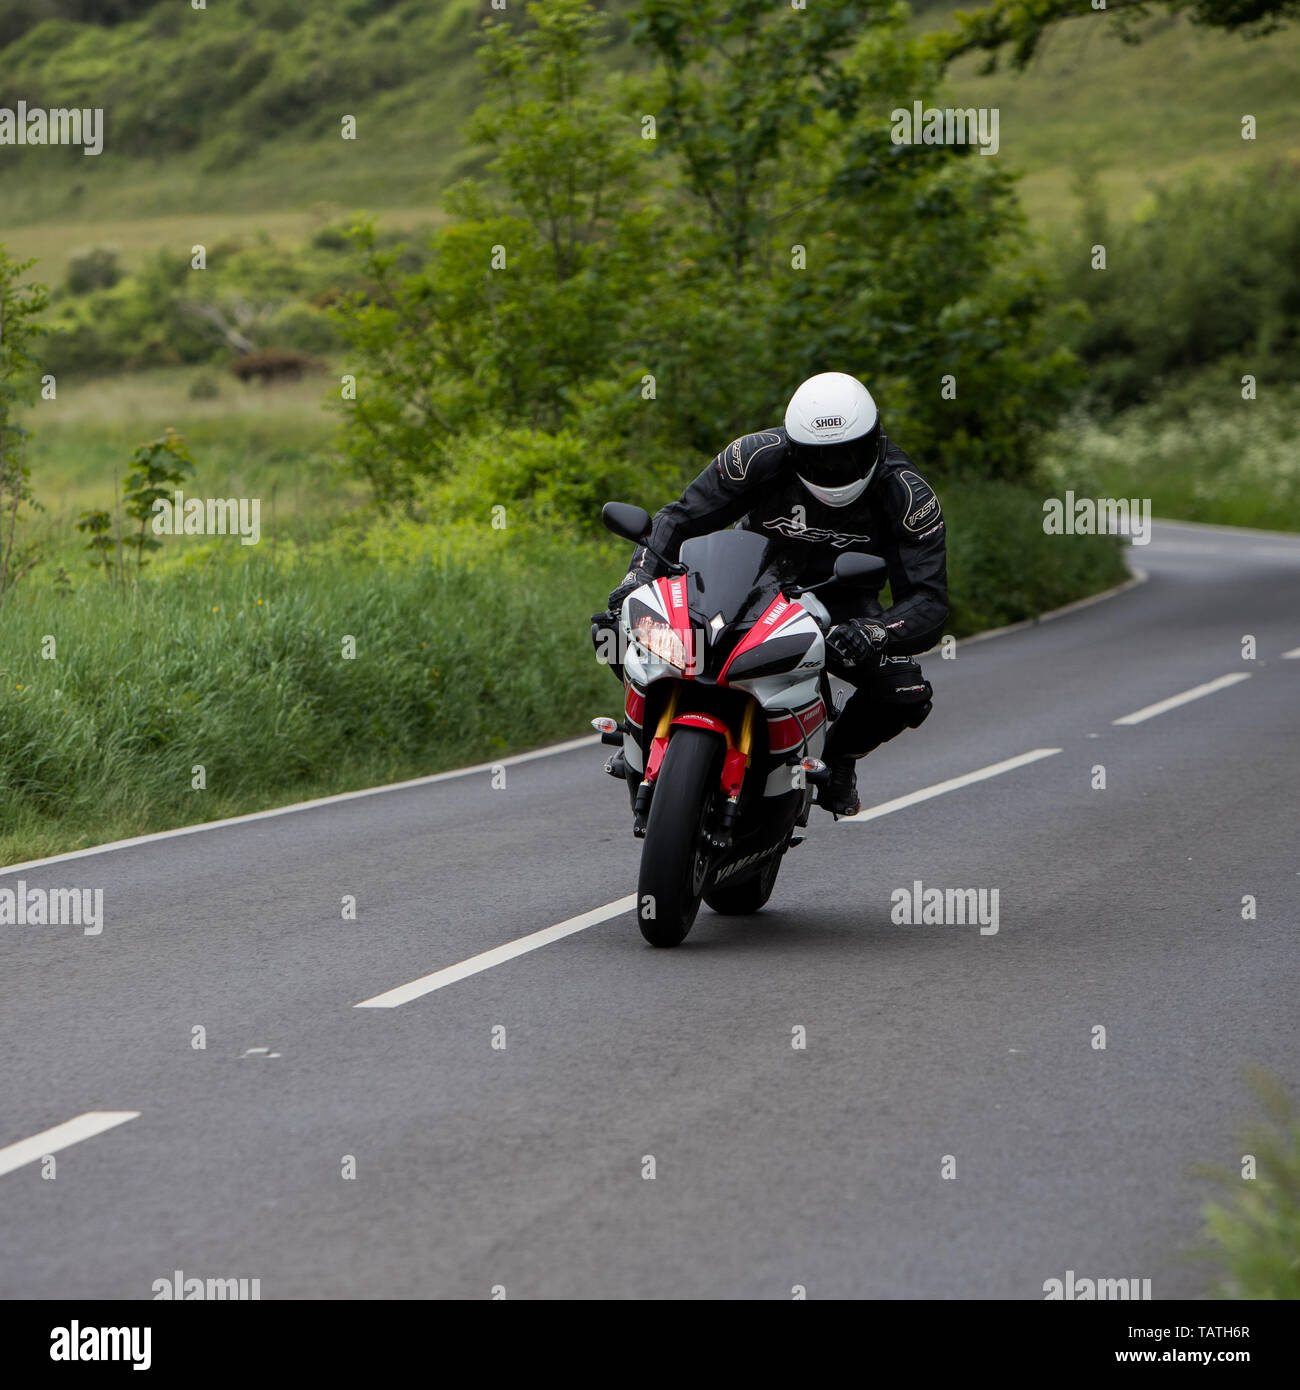 Yamaha r6 bike hi-res stock photography and images - Alamy